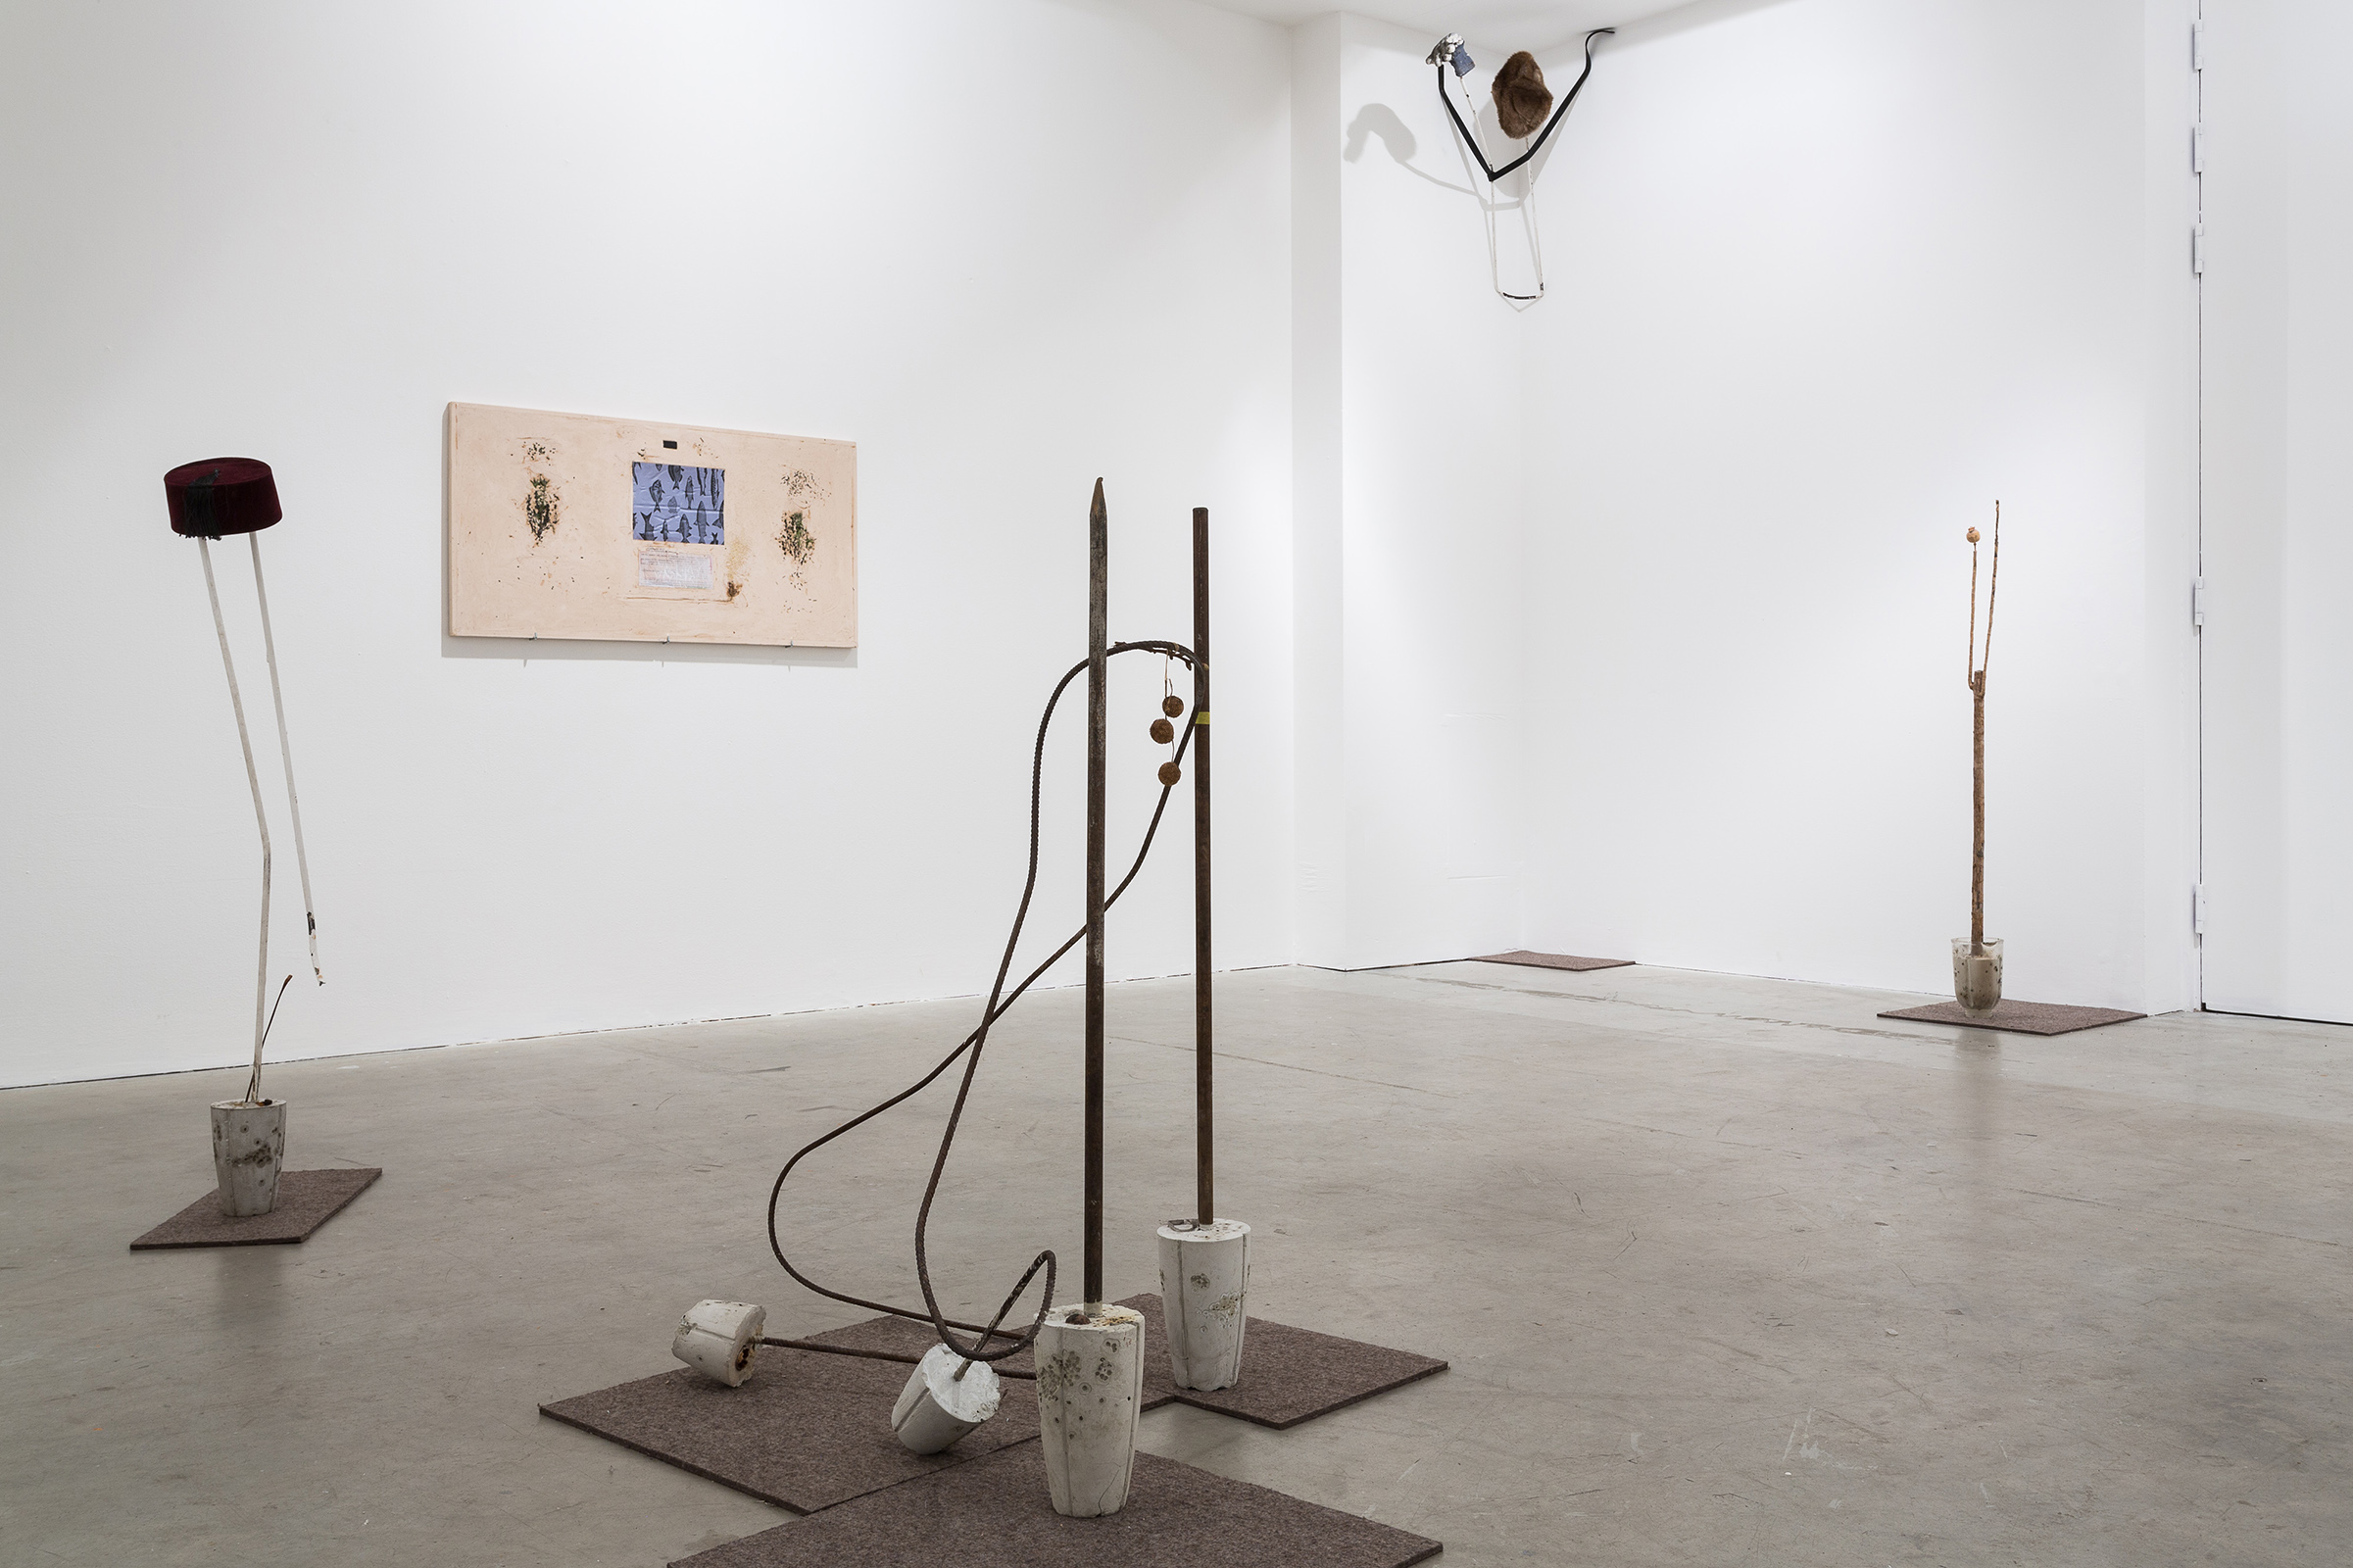 Now Panic, 2015, George Rippon, Vilma Gold, London, installation view. Now Panic
, George Rippon